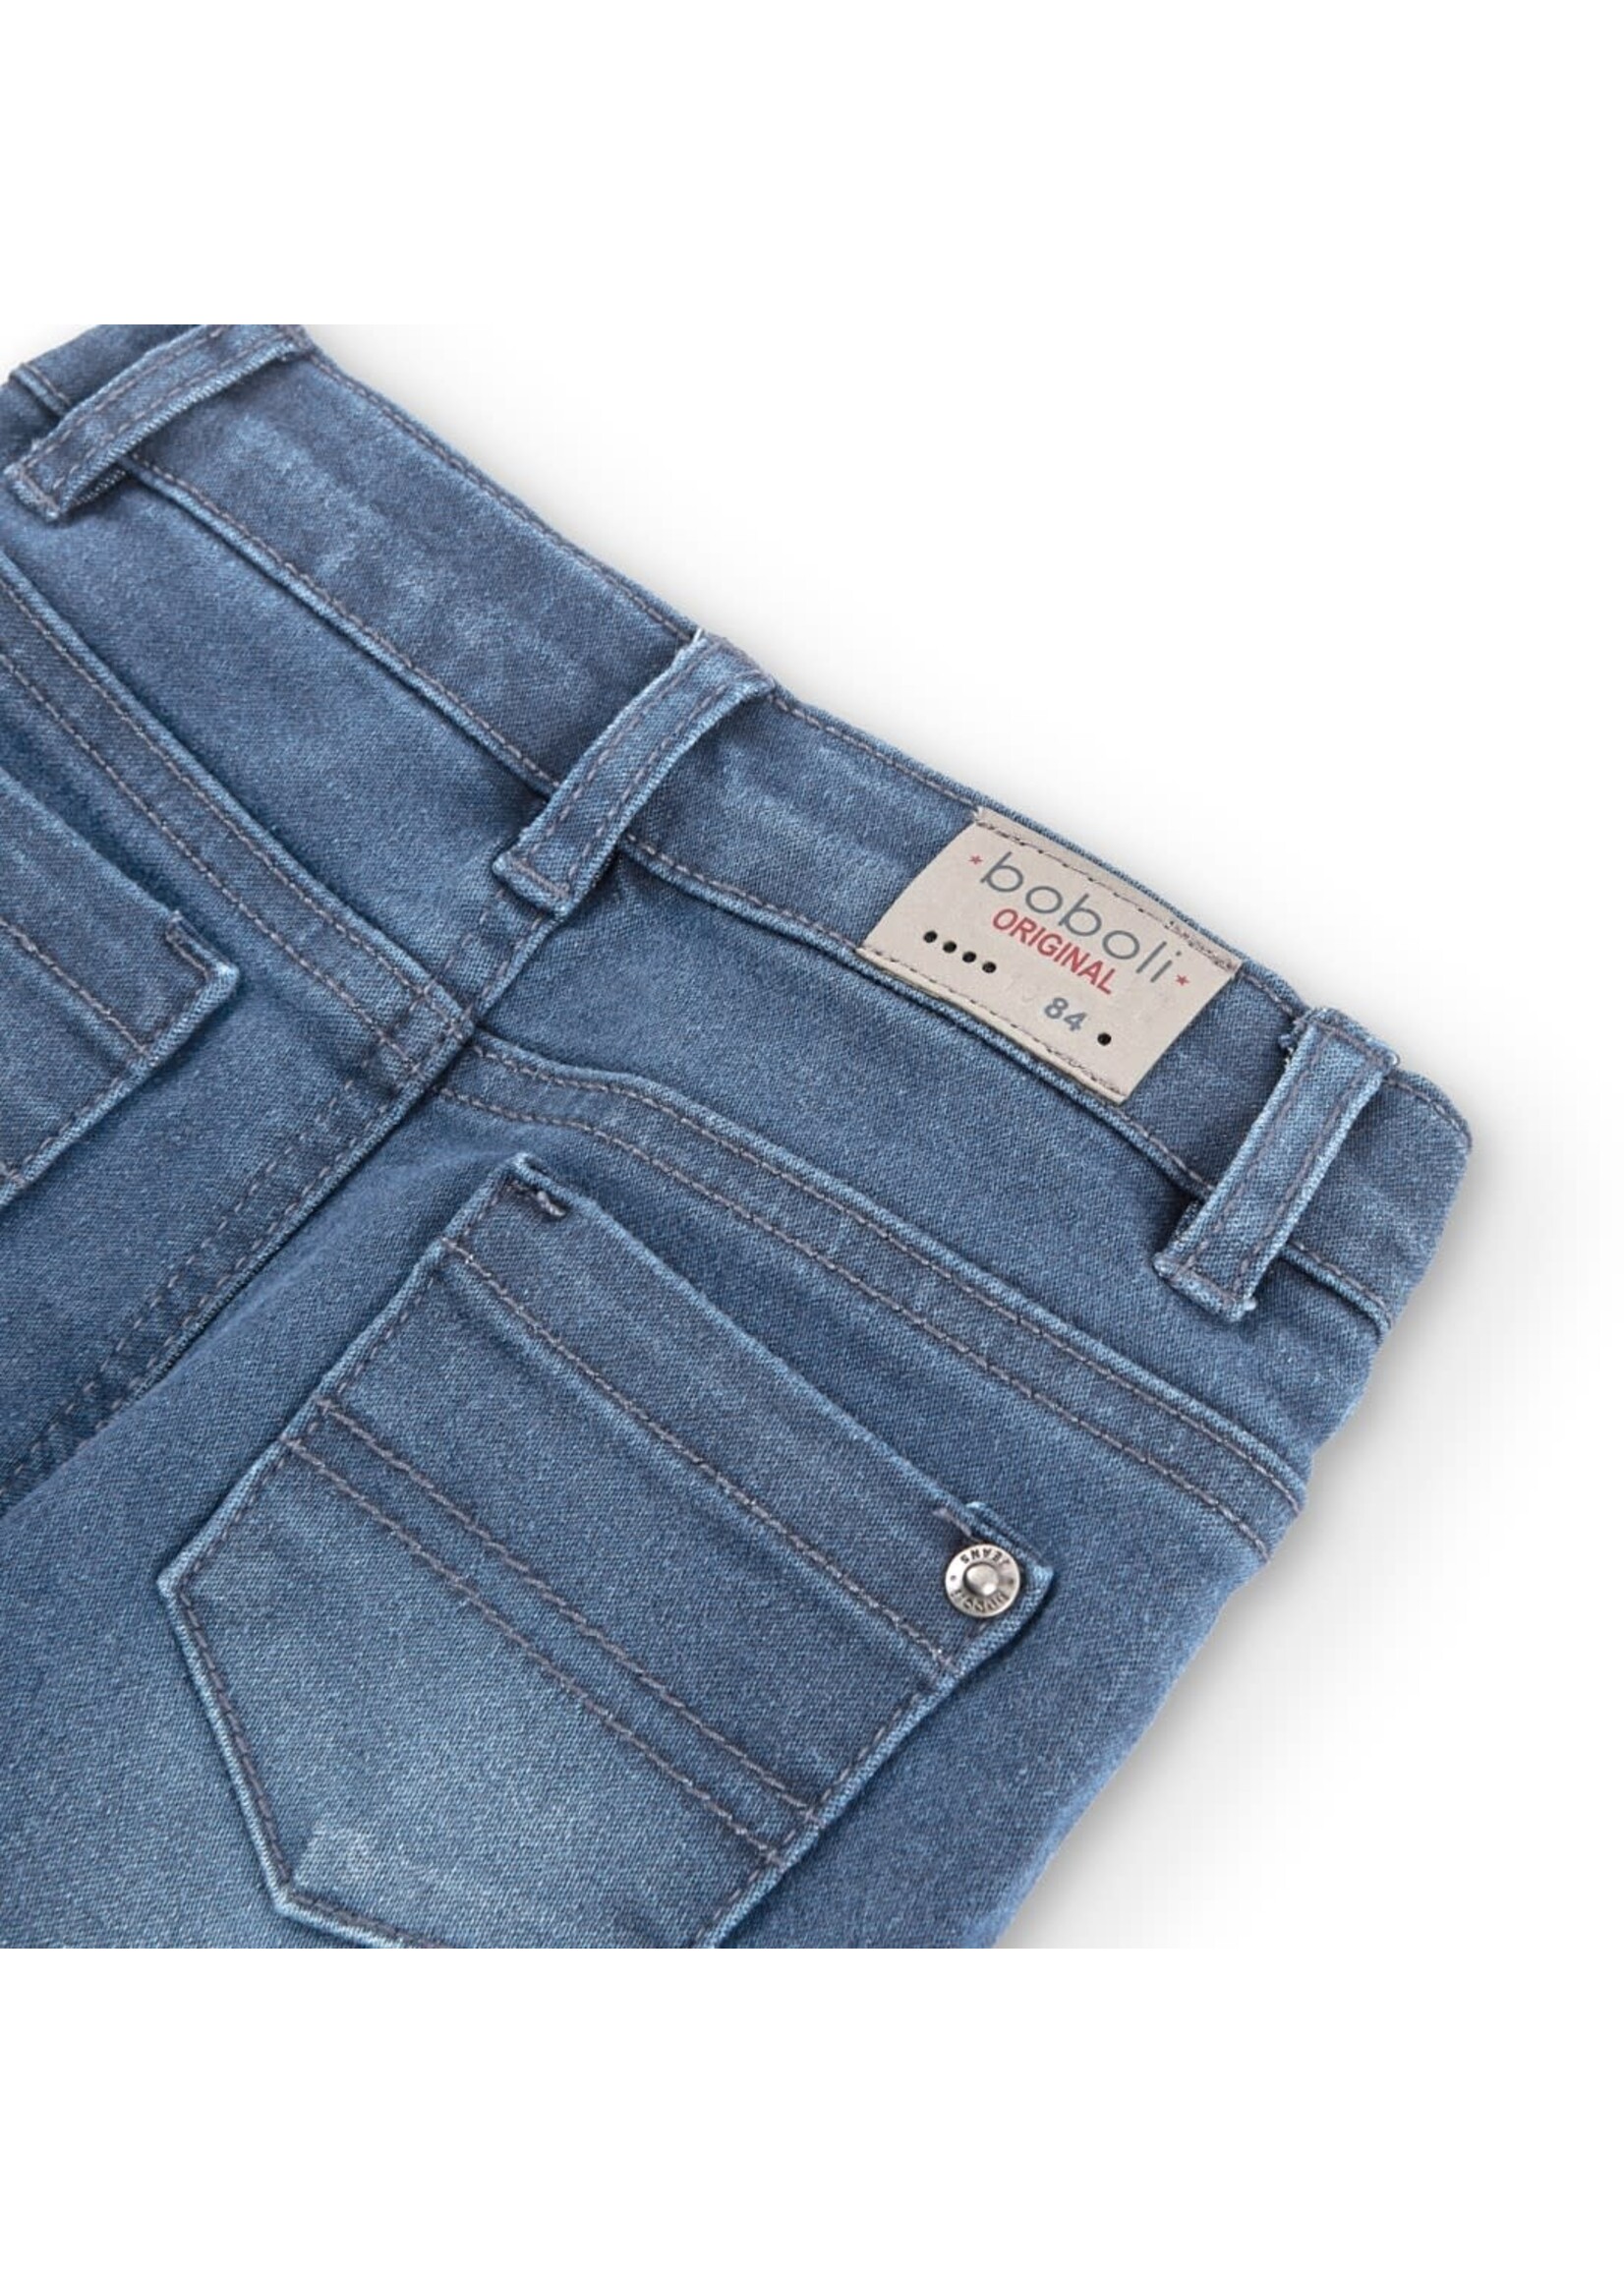 Boboli Denim stretch trousers for baby boy BLUE 390002